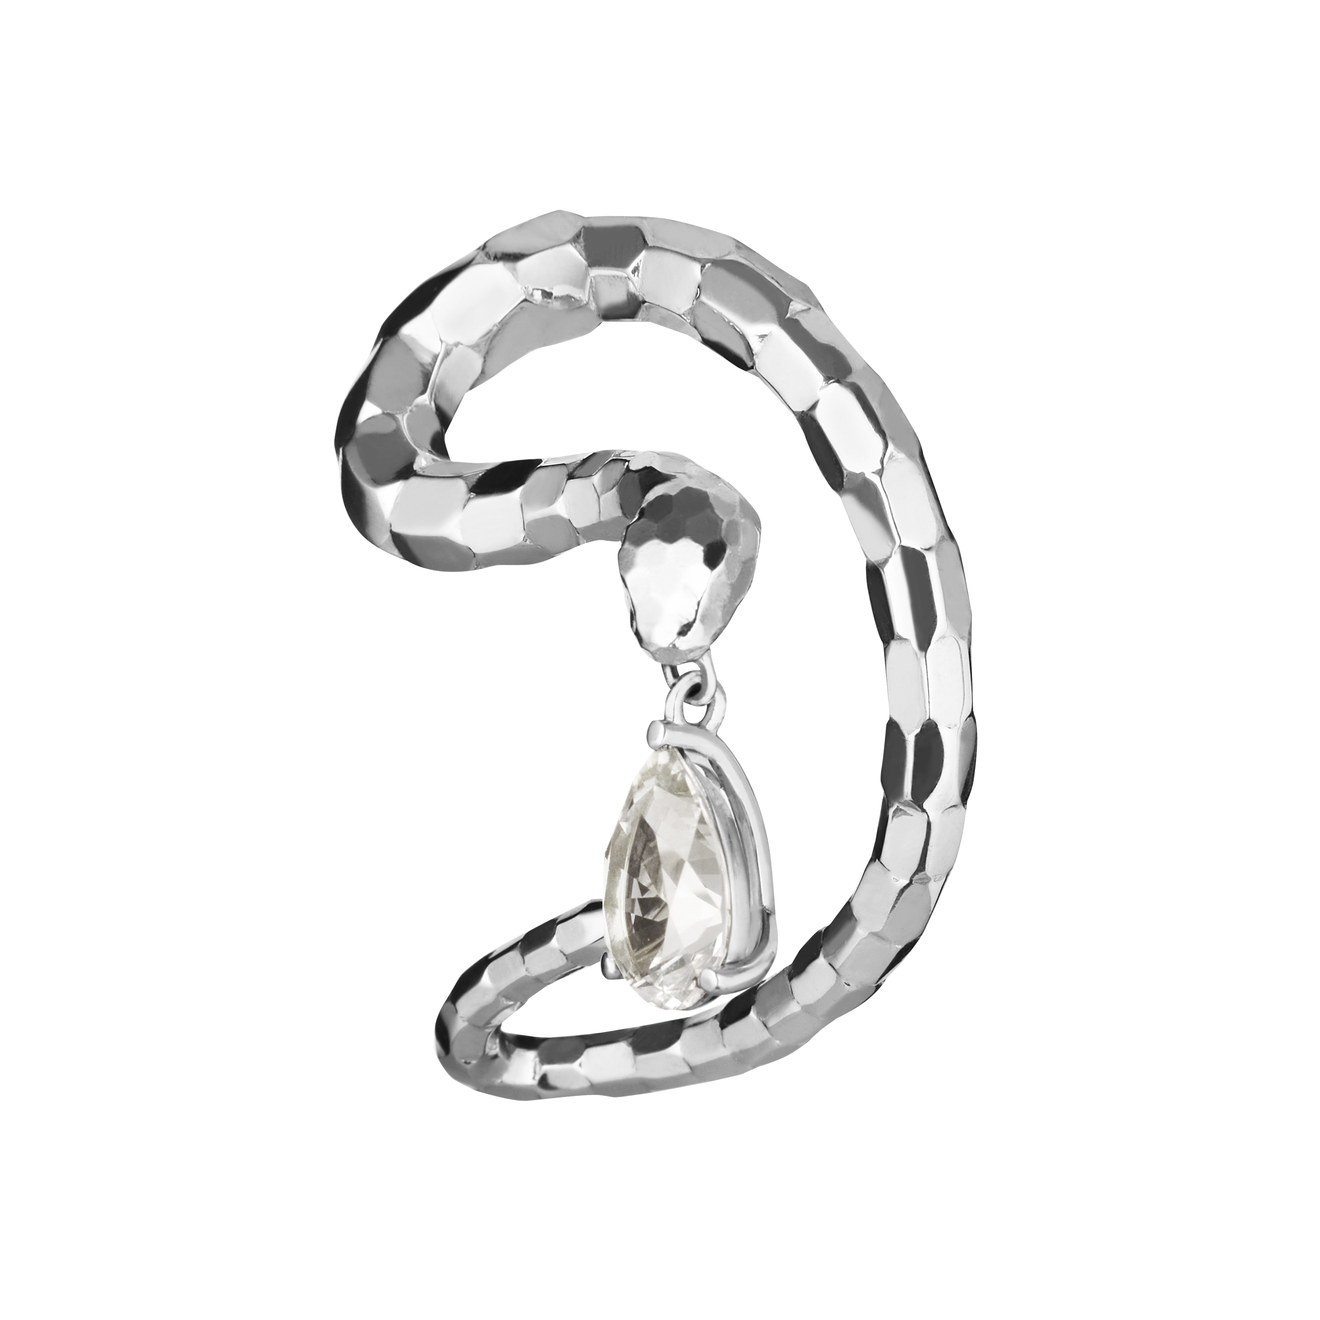 Vertigo Jewellery Lab Кафф-змея VENENUM из серебра vertigo jewellery lab позолоченный кафф из серебра essentials